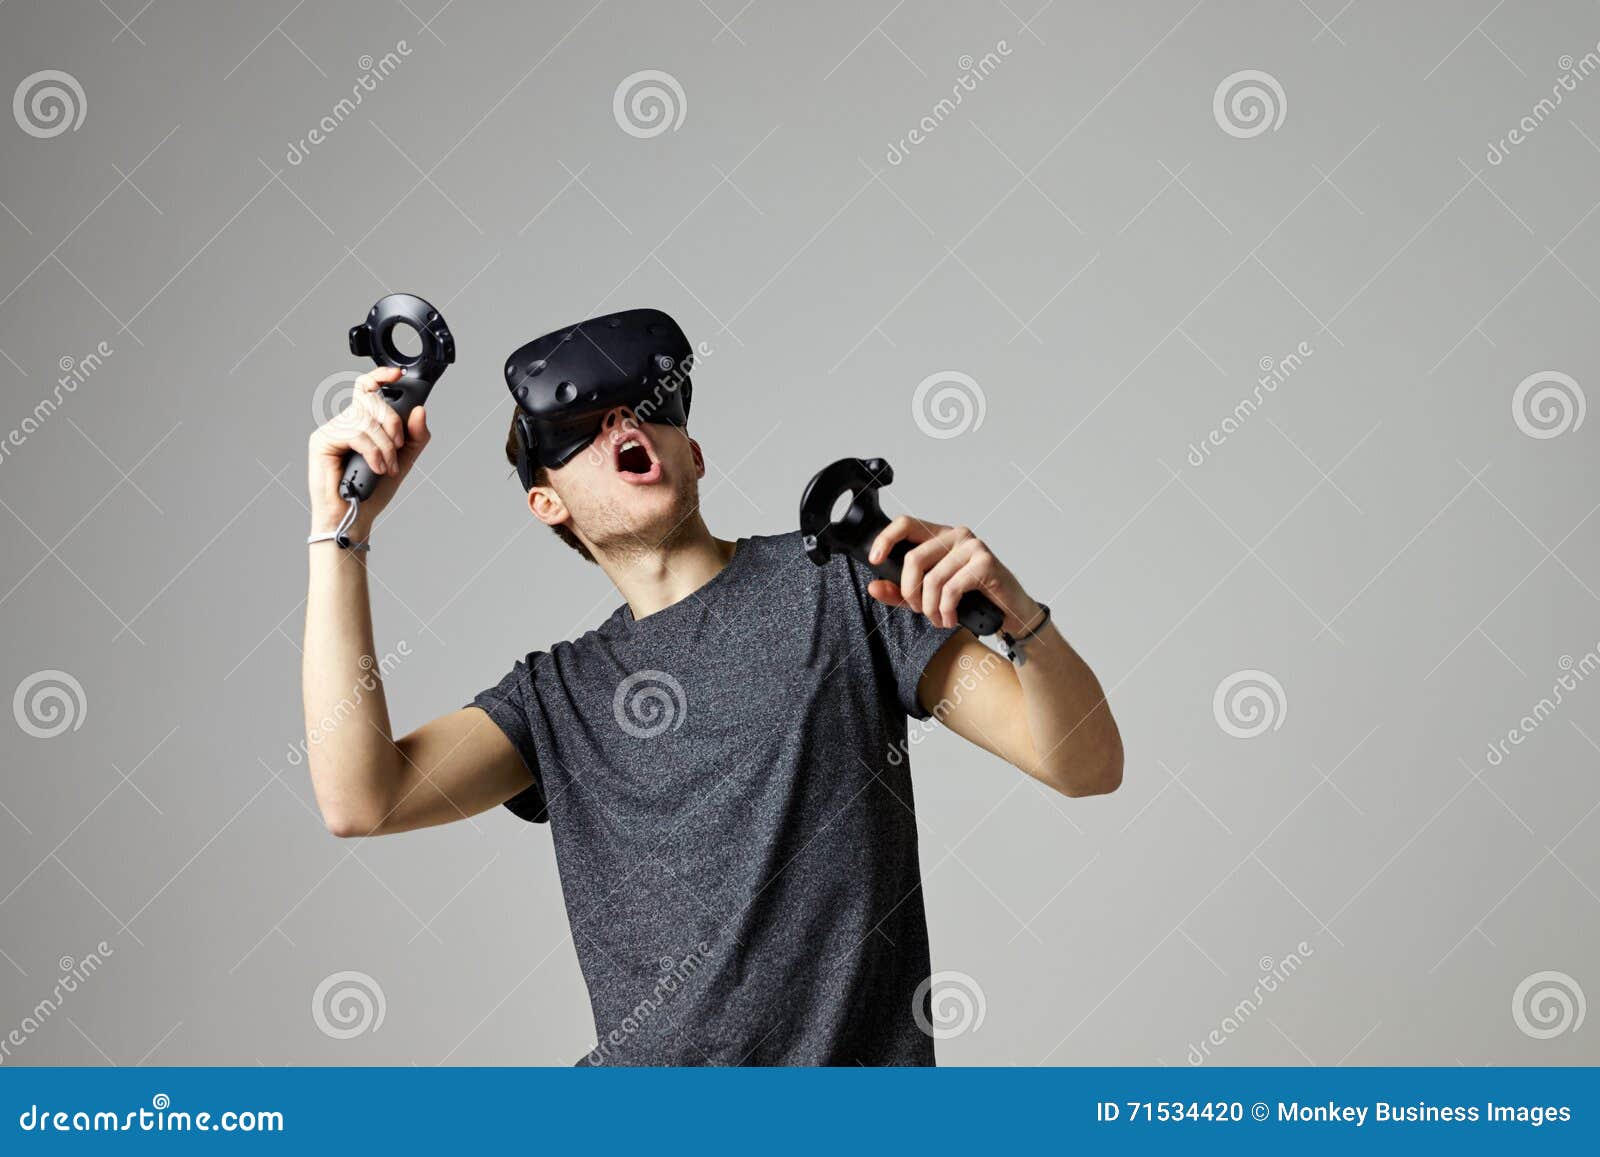 woman watching television wearing virtual reality headset